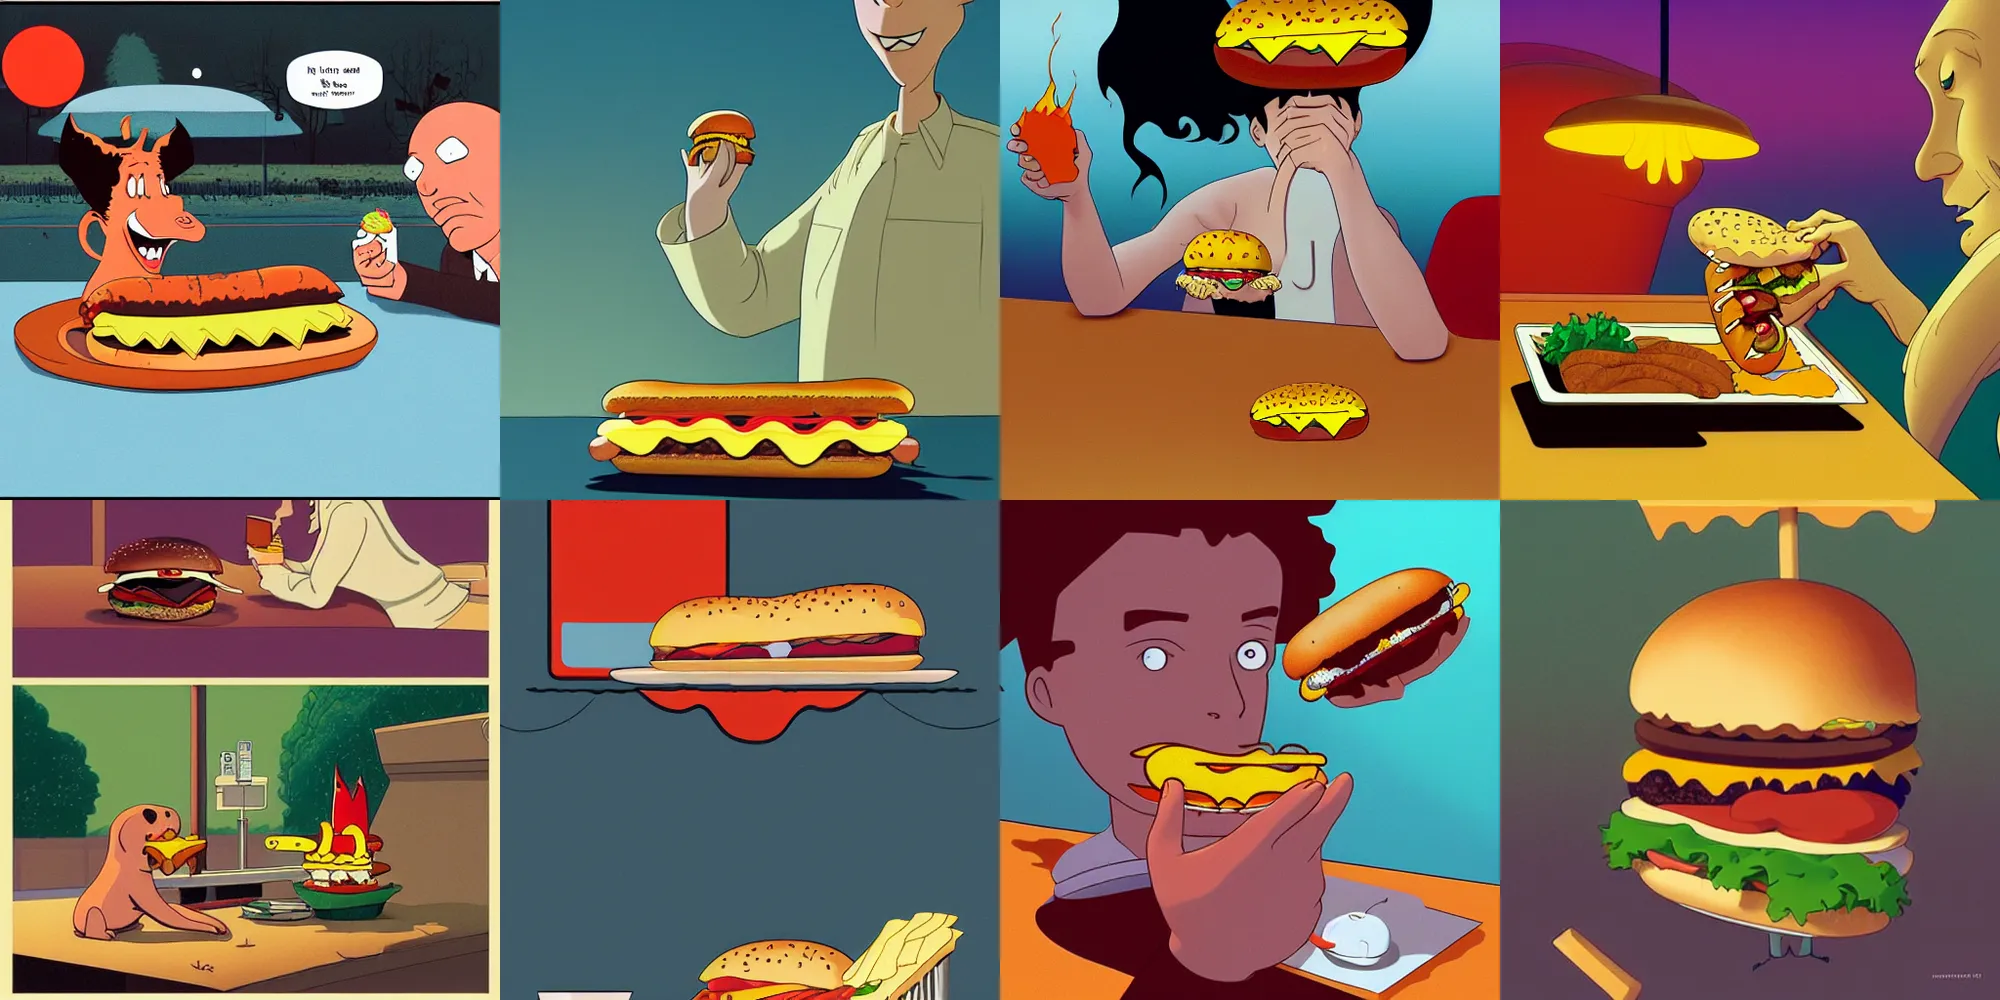 Prompt: a cartoon hot dog eating a burger, by michael whelan and tomer hanuka, by makoto shinkai and thomas kinkade, by herge, trending on artstation